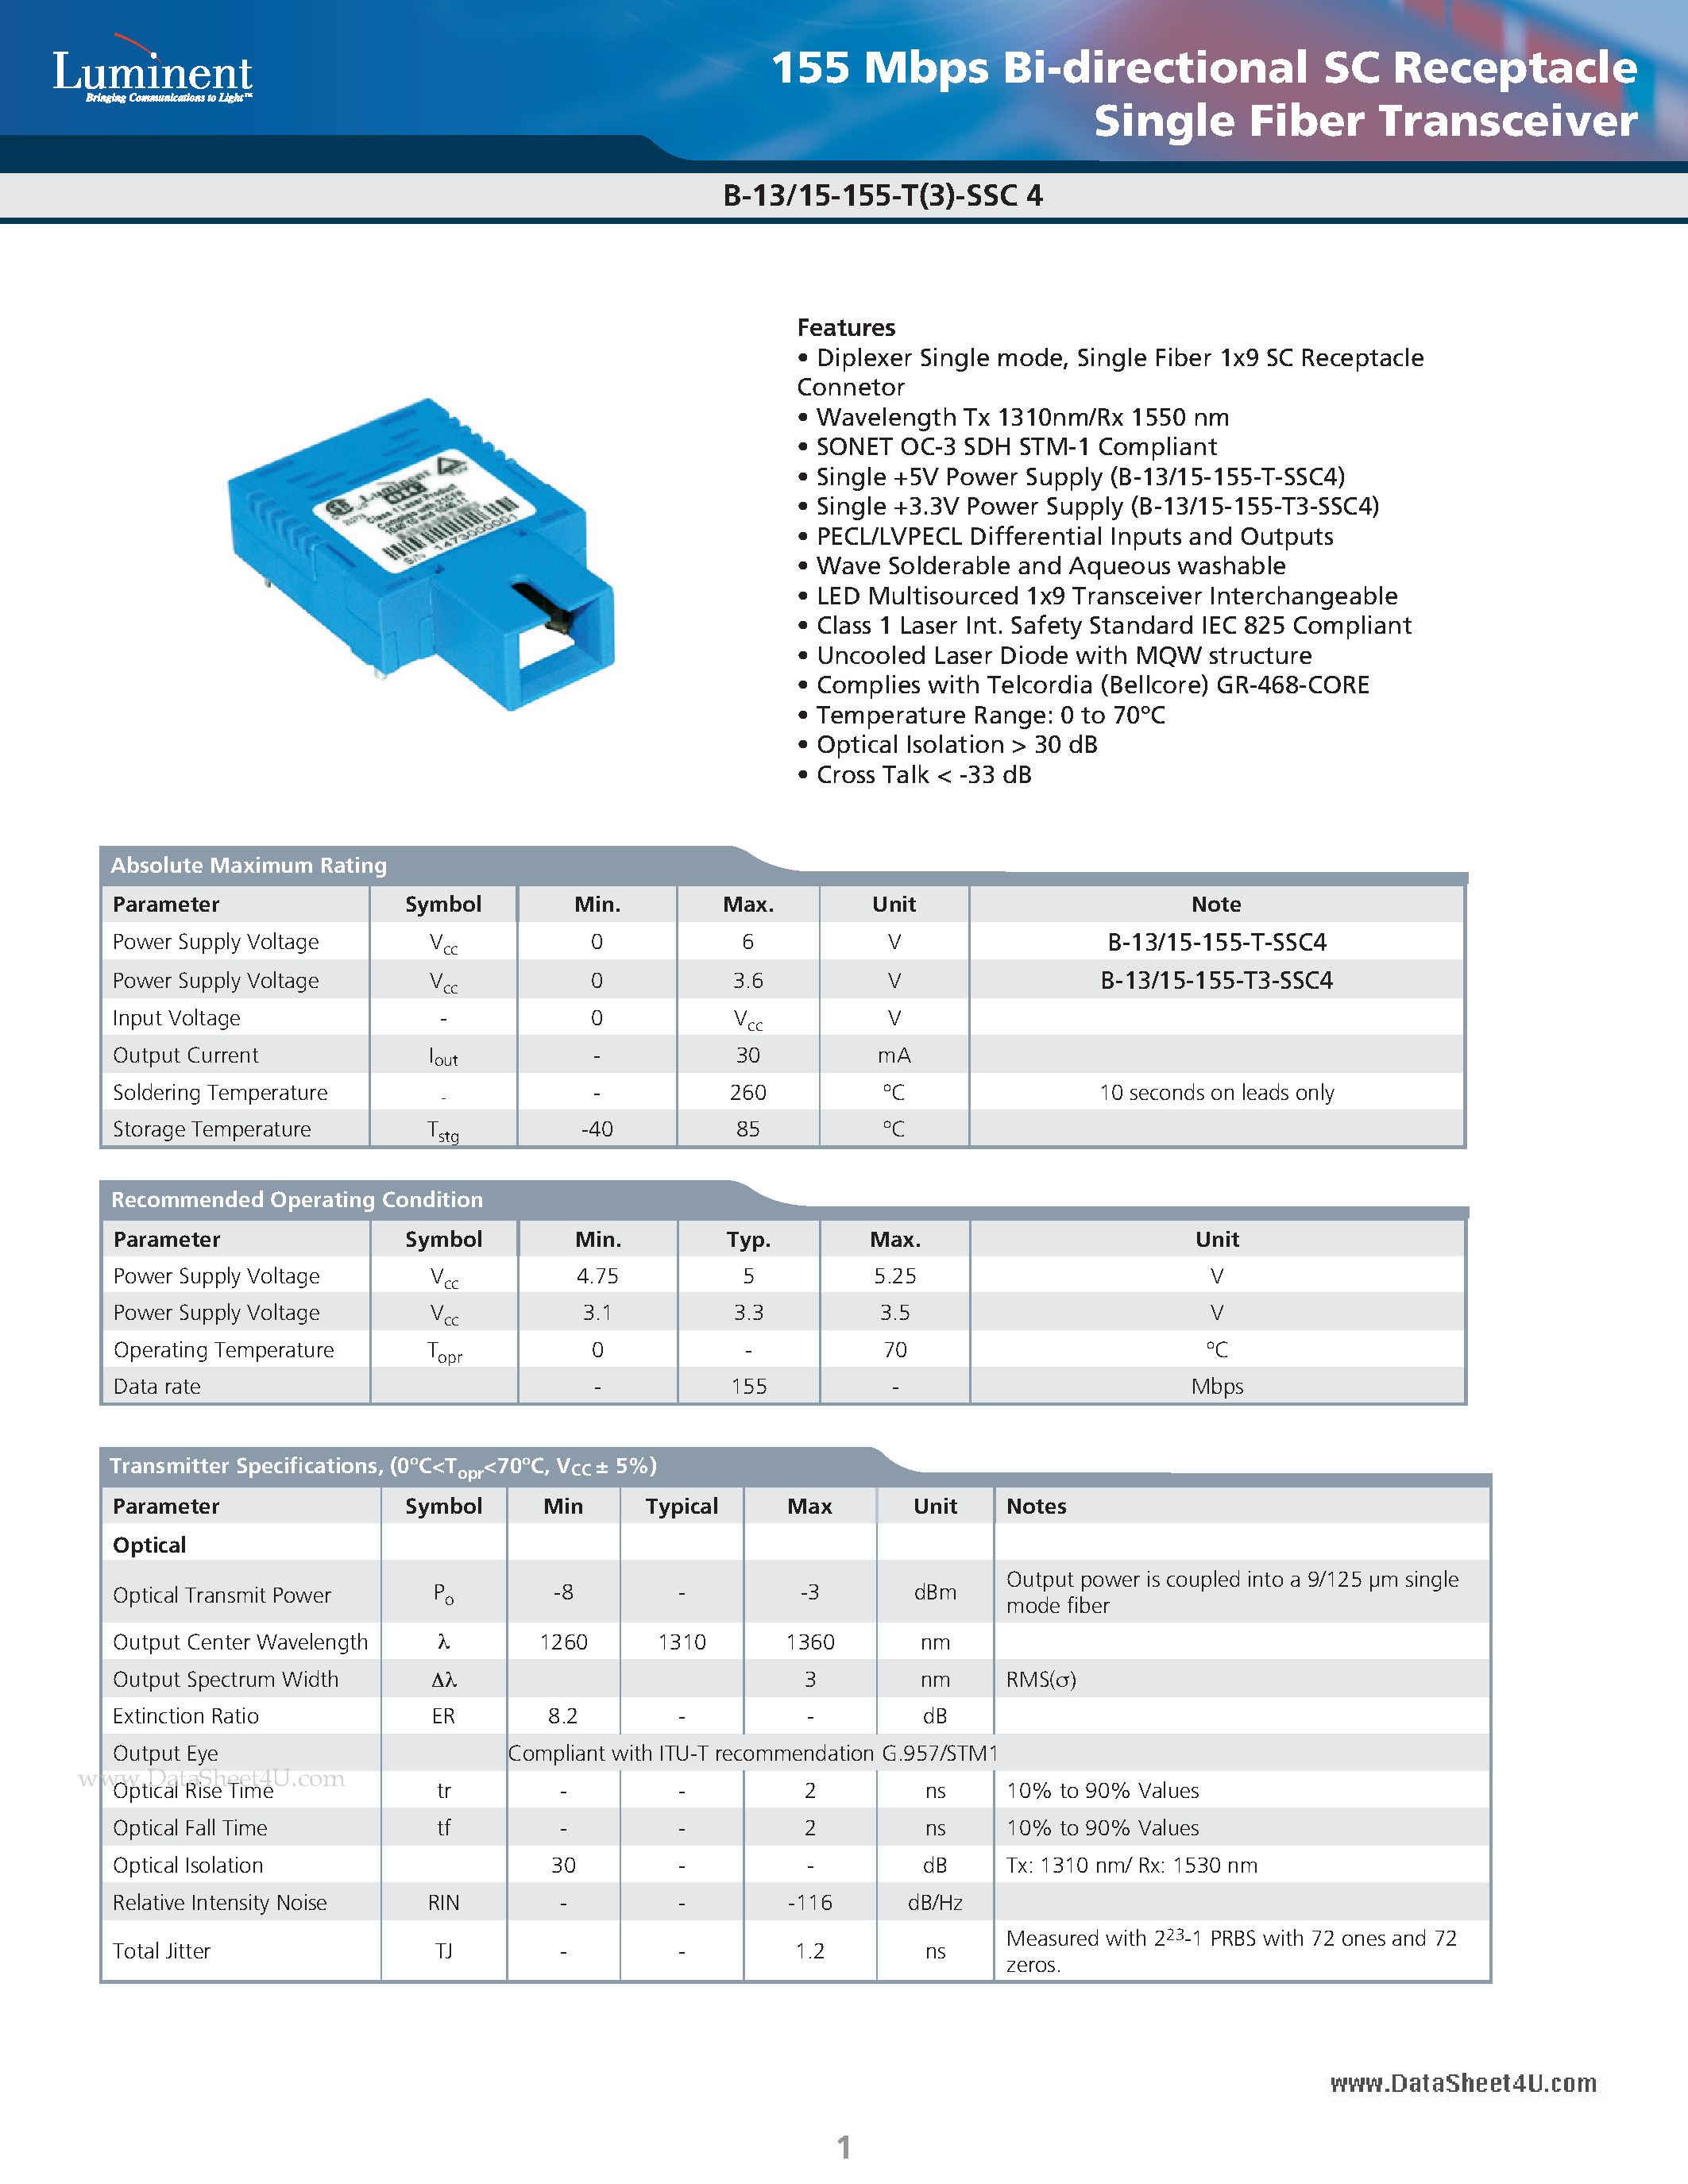 Даташит B-13-15-155-T-SSC4 - 155 Mbps Bi-directional SC Receptacle Single Fiber Transceiver страница 1